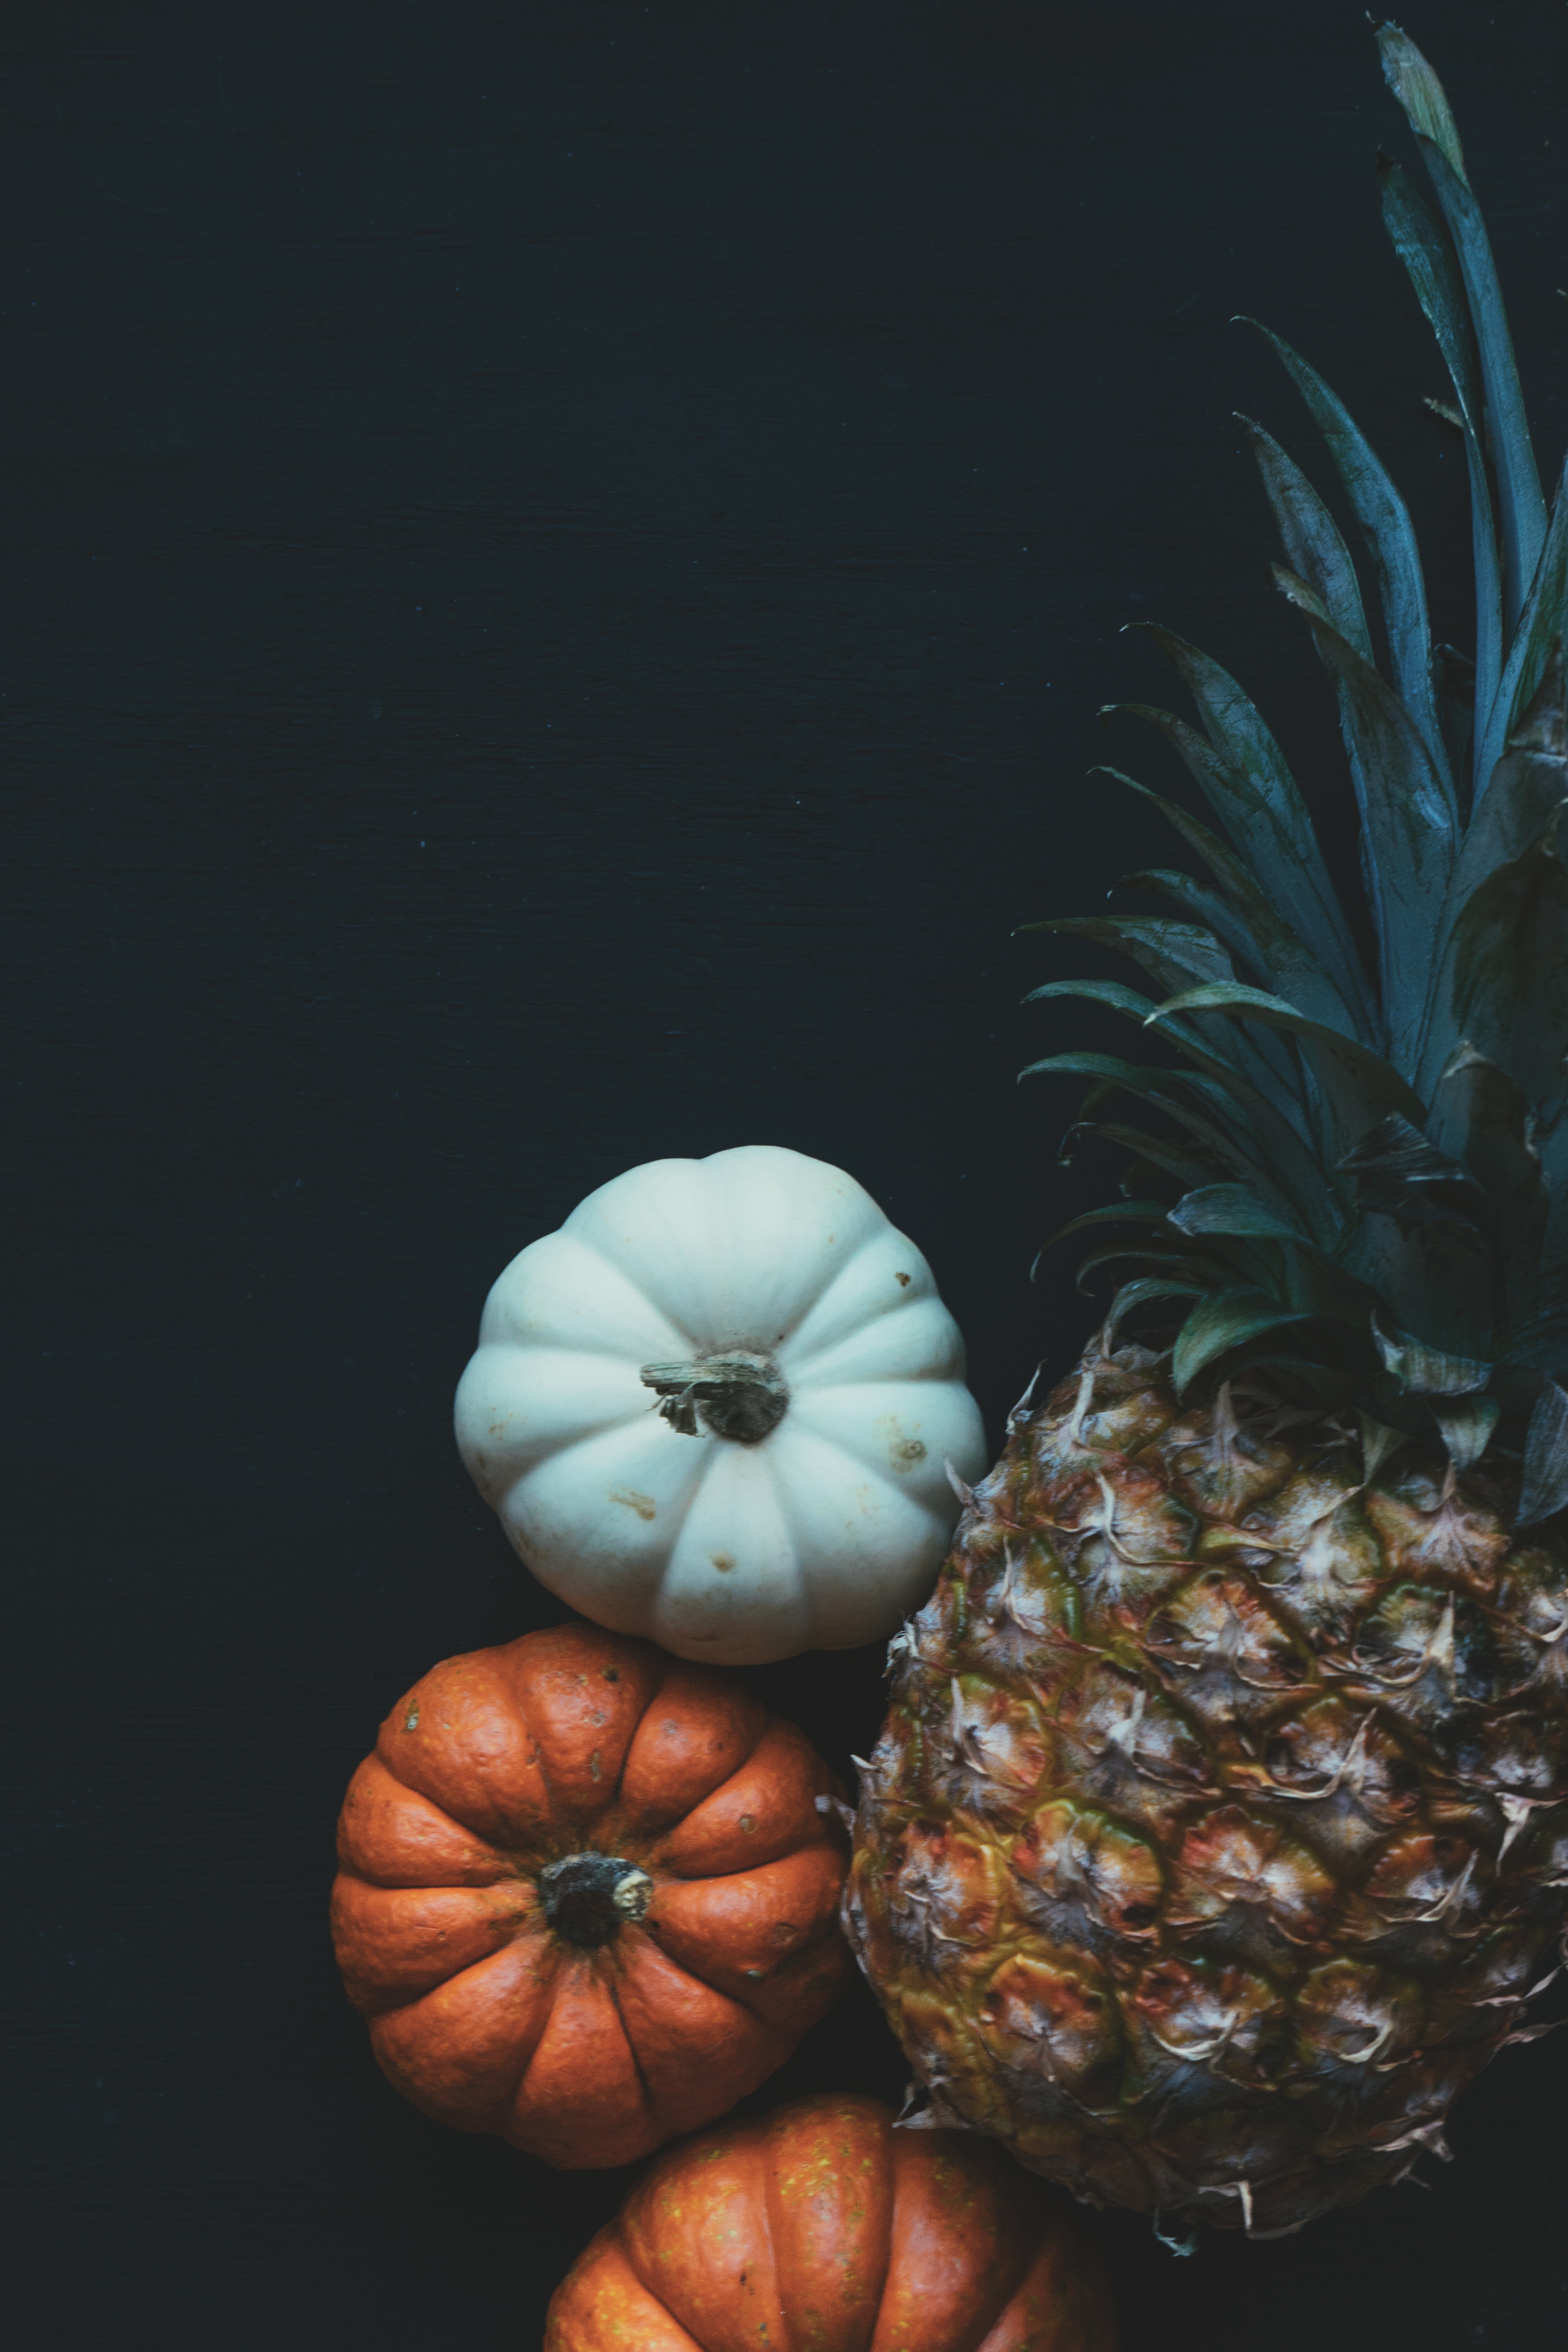 Pineapple beside pumpkin photo